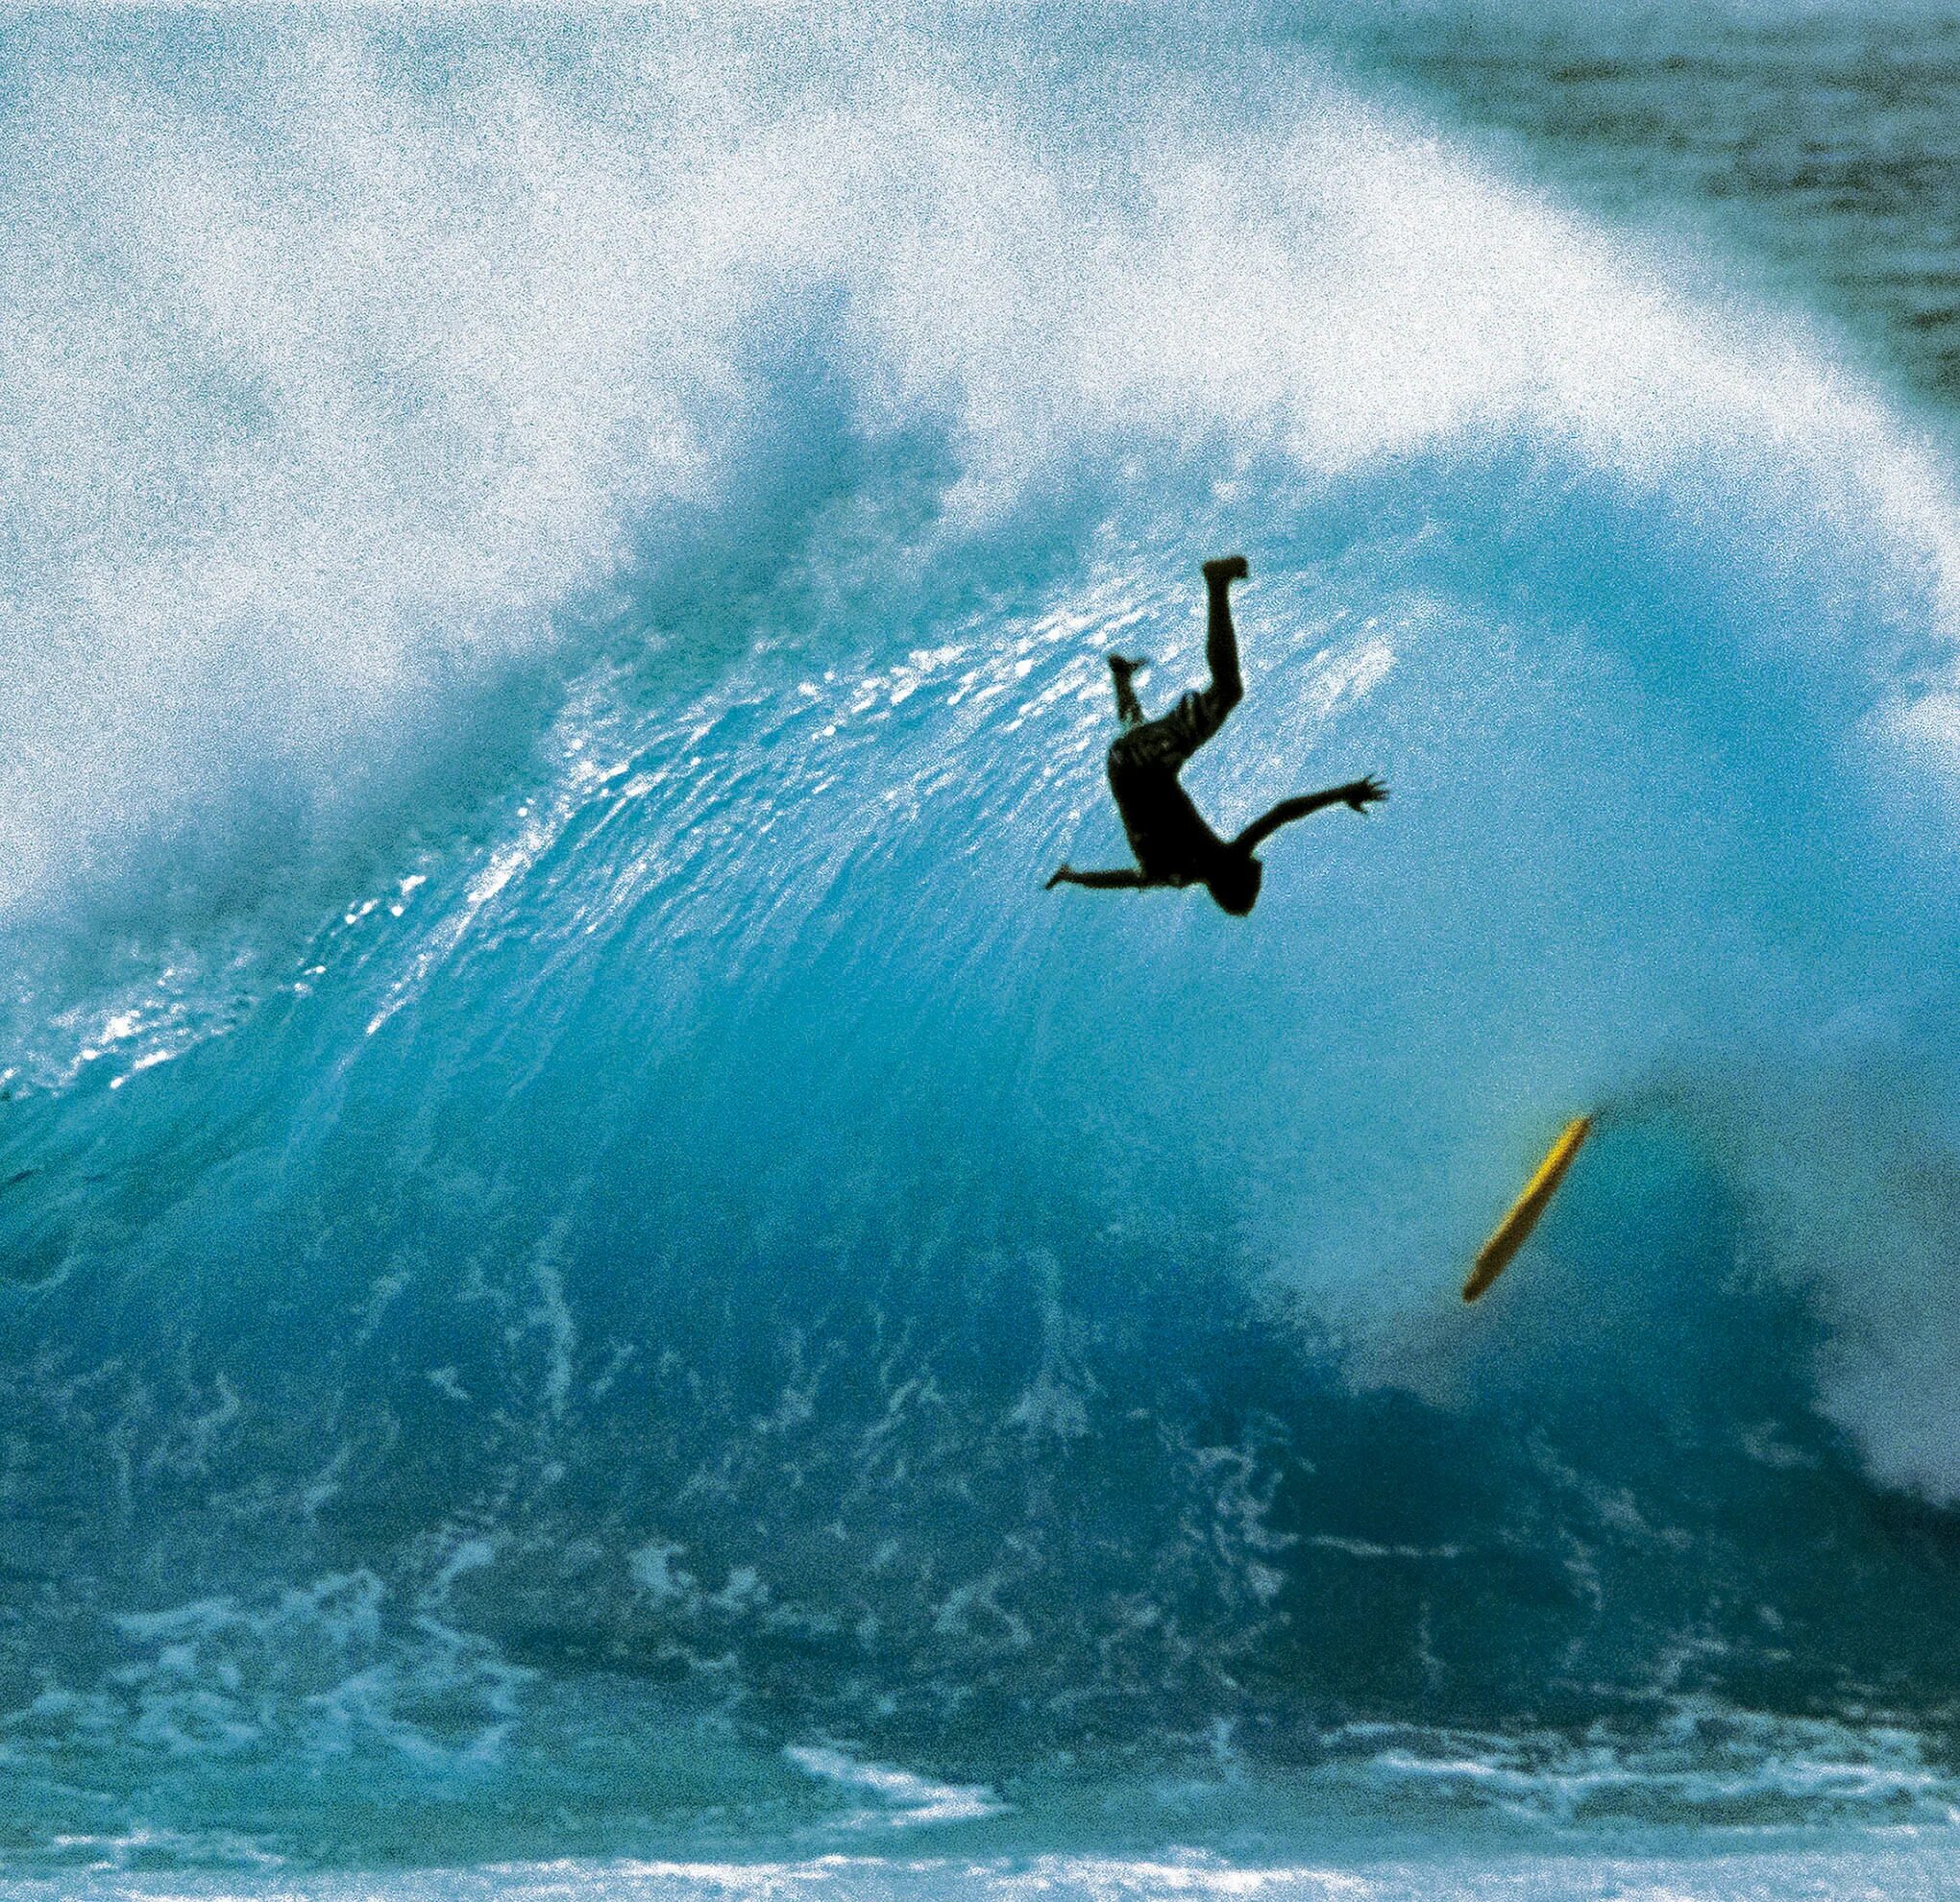 Оаху, Гавайи серфинг. На серфинг. Серфинг реальности. Серфинг картинки. Catching wave